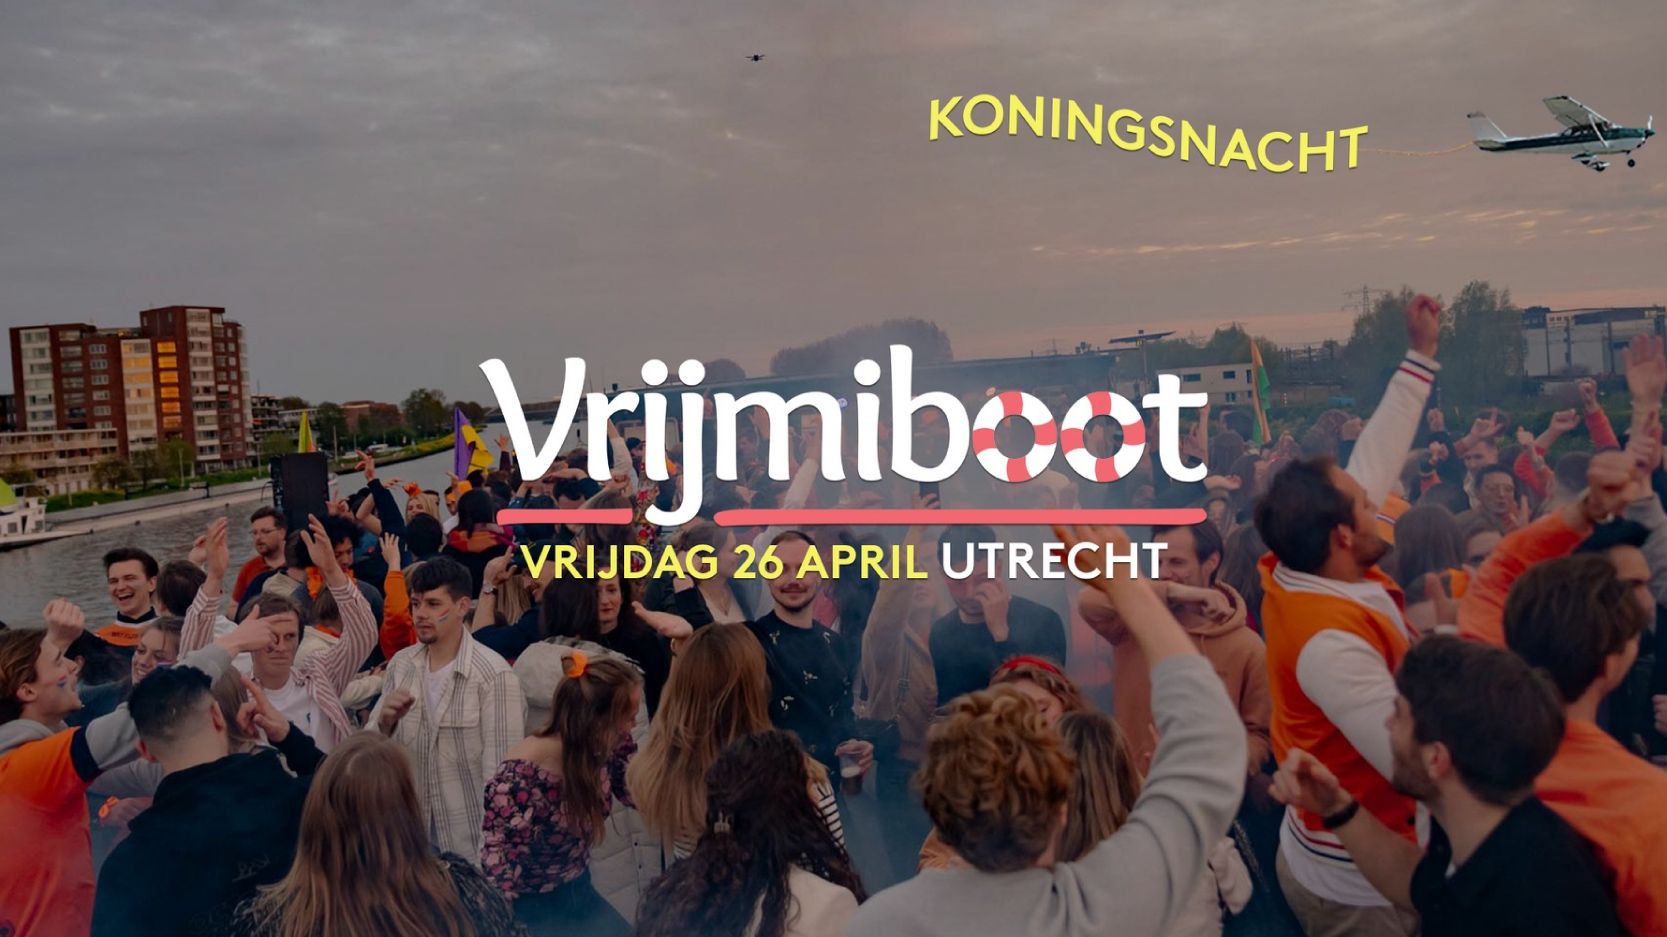 Vrijmiboot koningsnacht - Utrecht cover